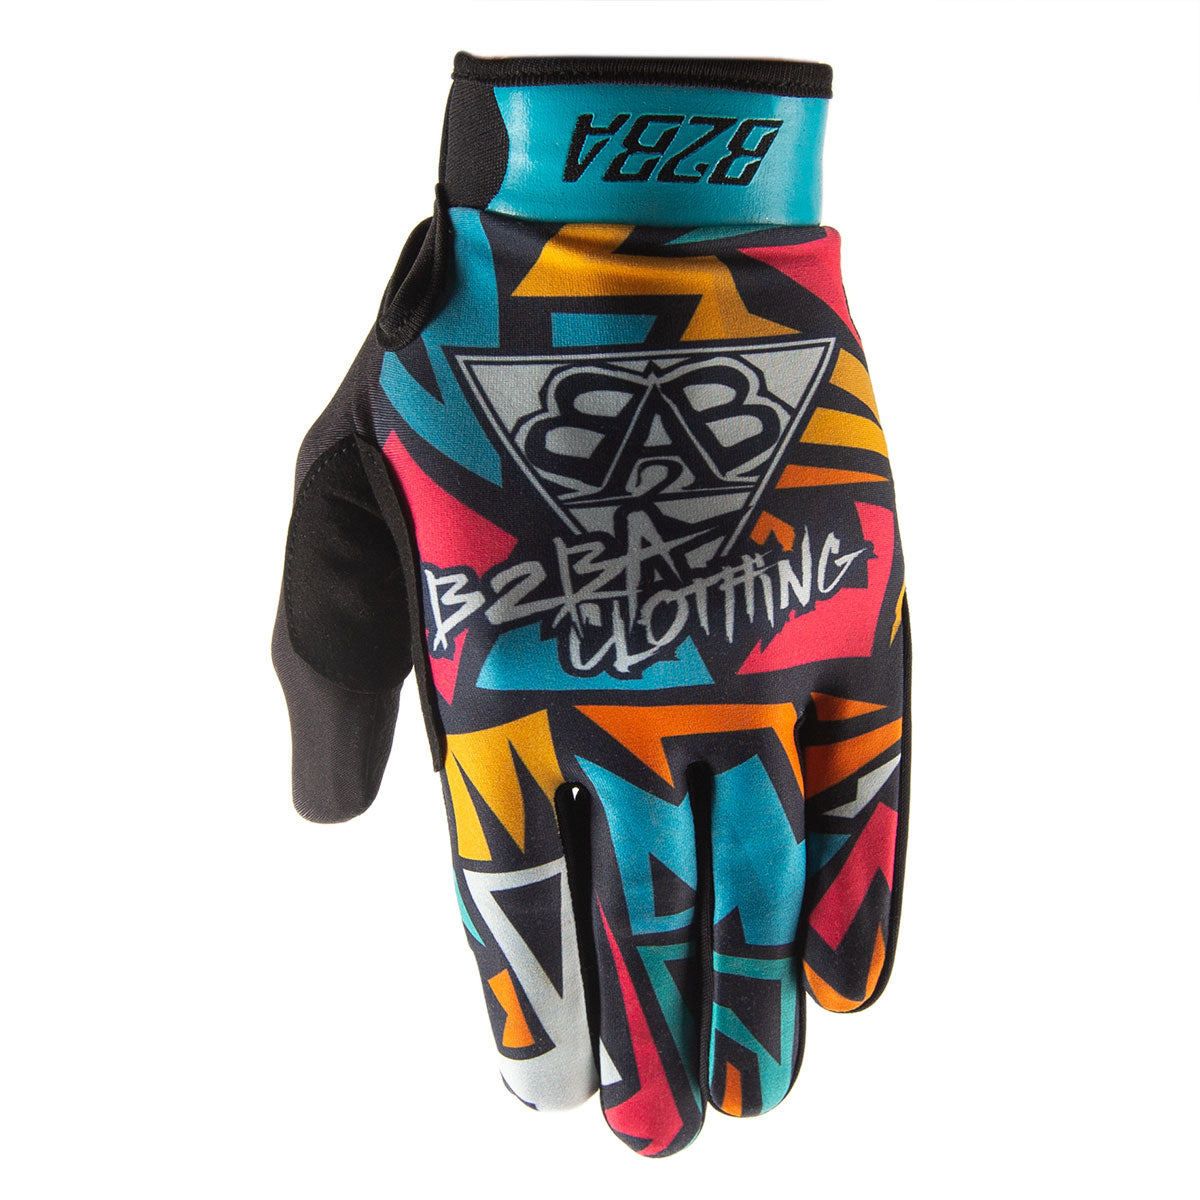 Maniac Race Glove Graffiti - B2BA Clothing